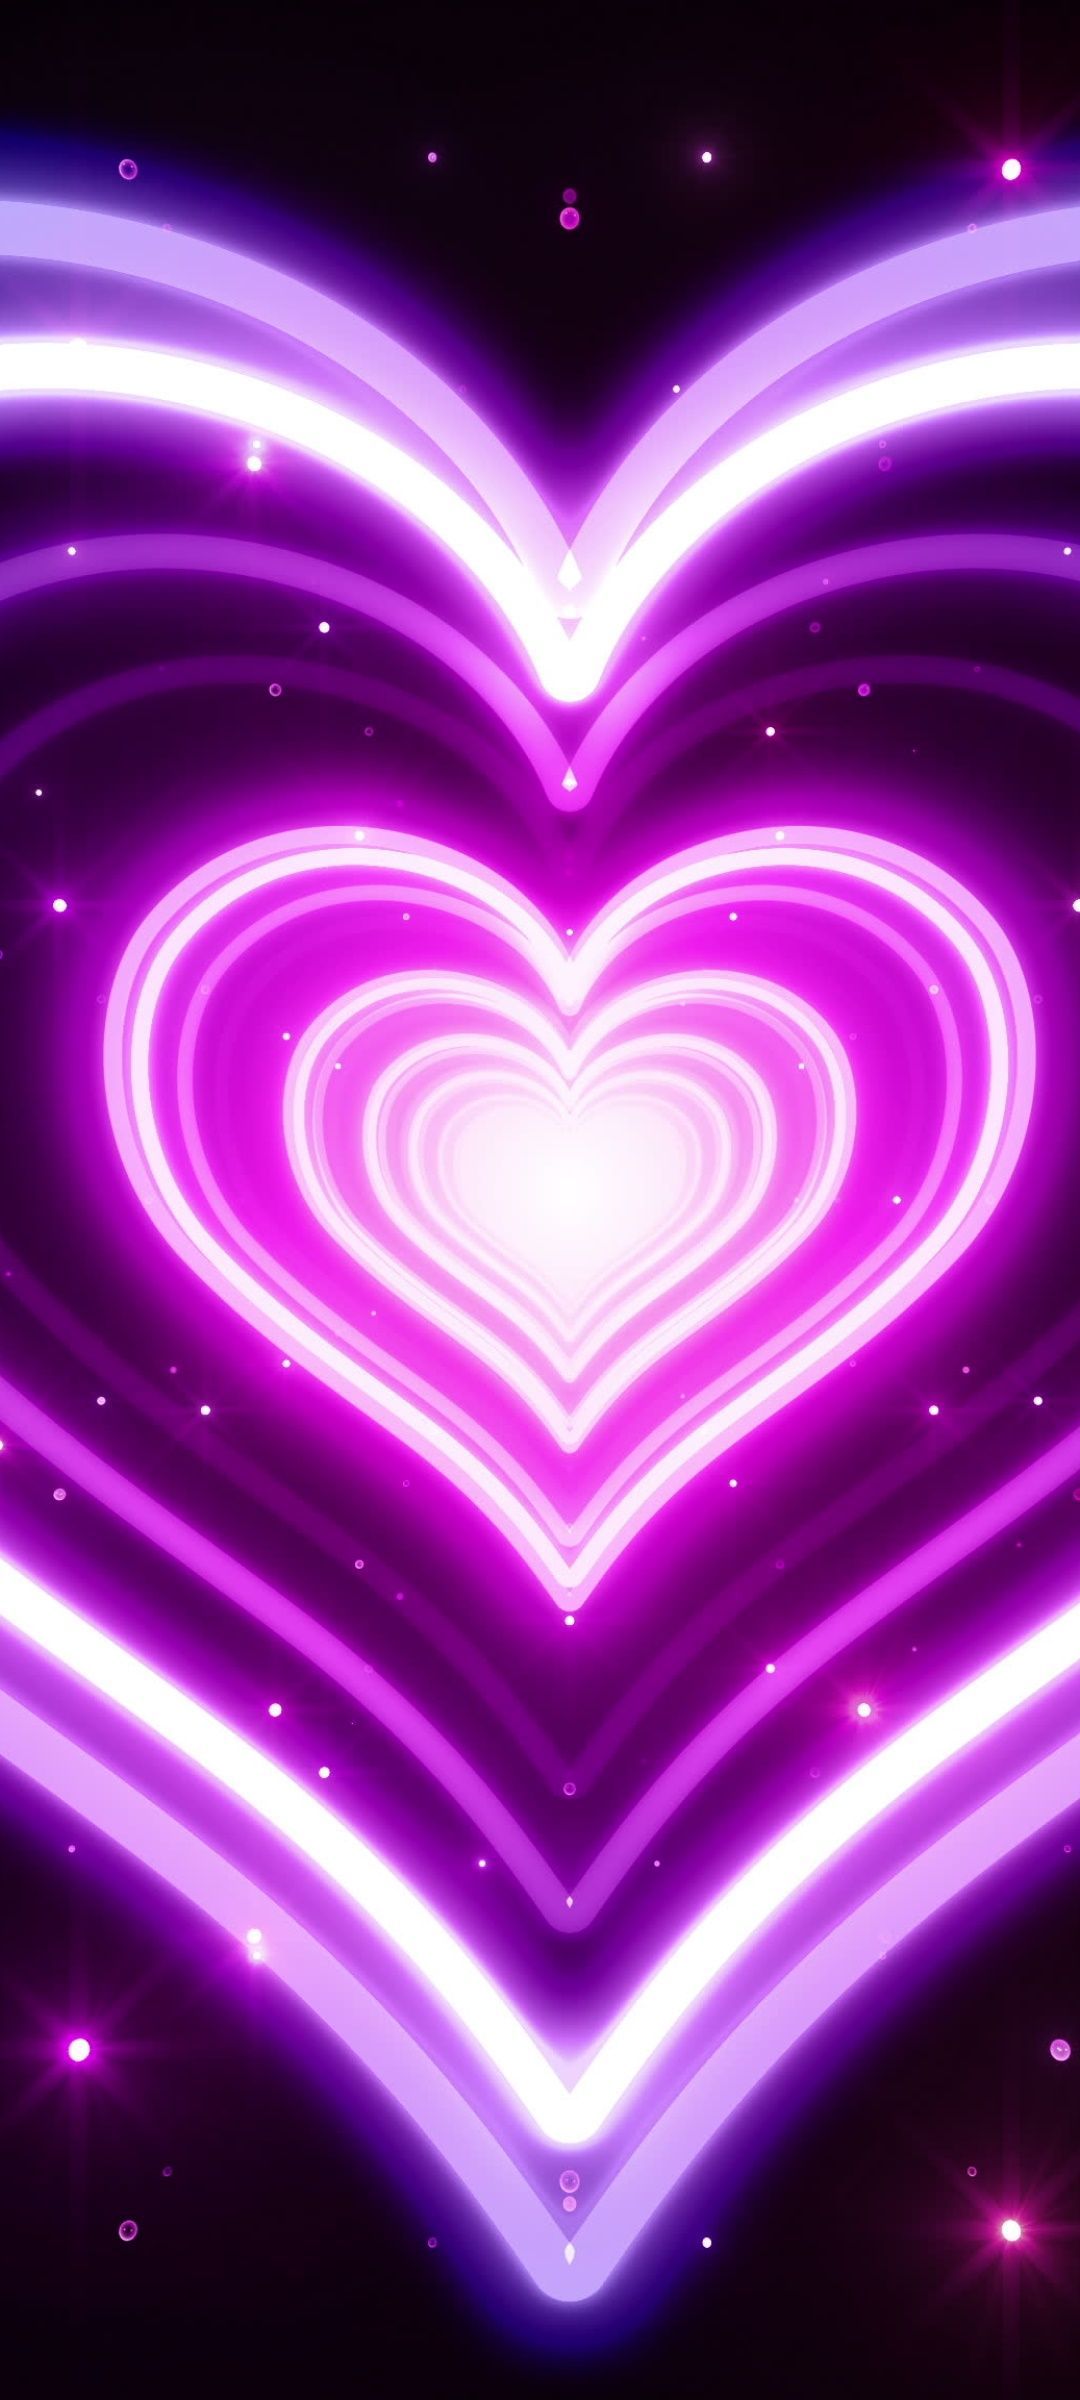 A purple heart shaped light on black background - Neon purple, 1080x2400